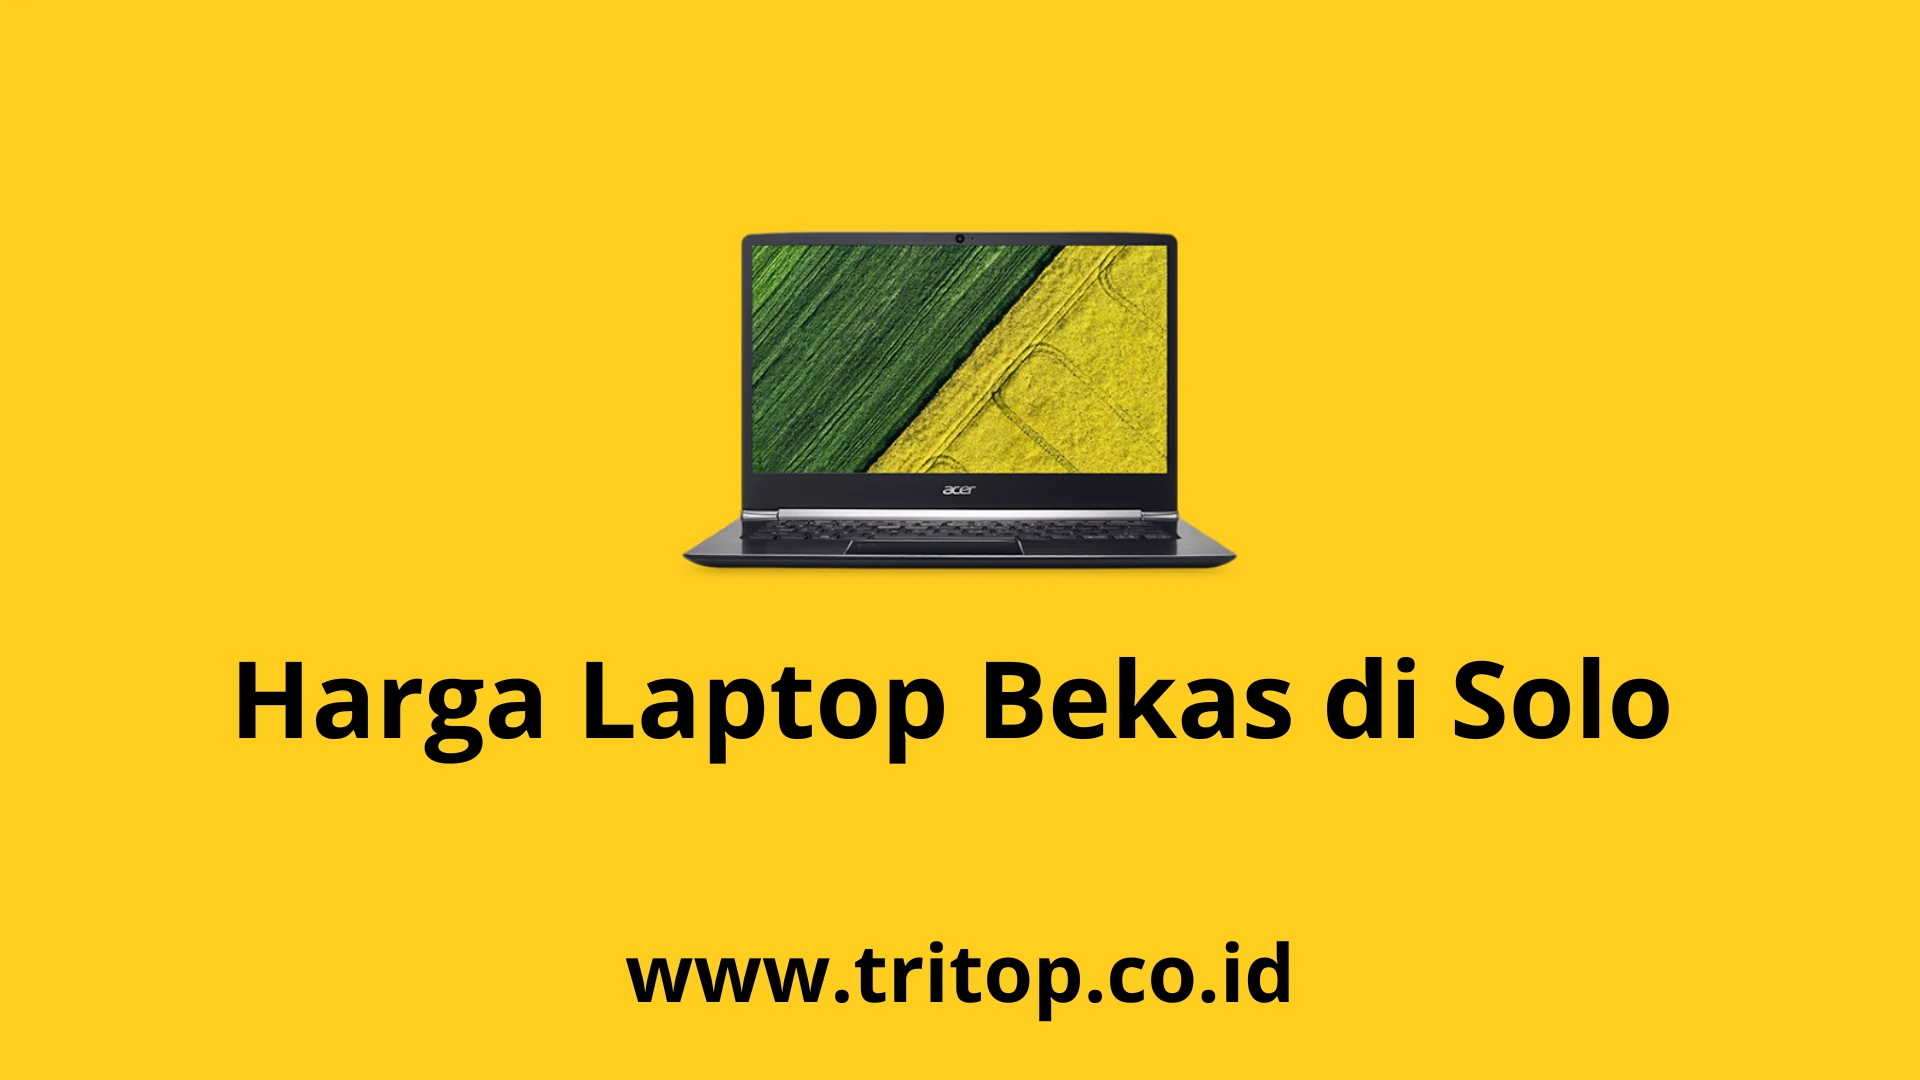 Harga Laptop Bekas di Solo www.tritop.co.id